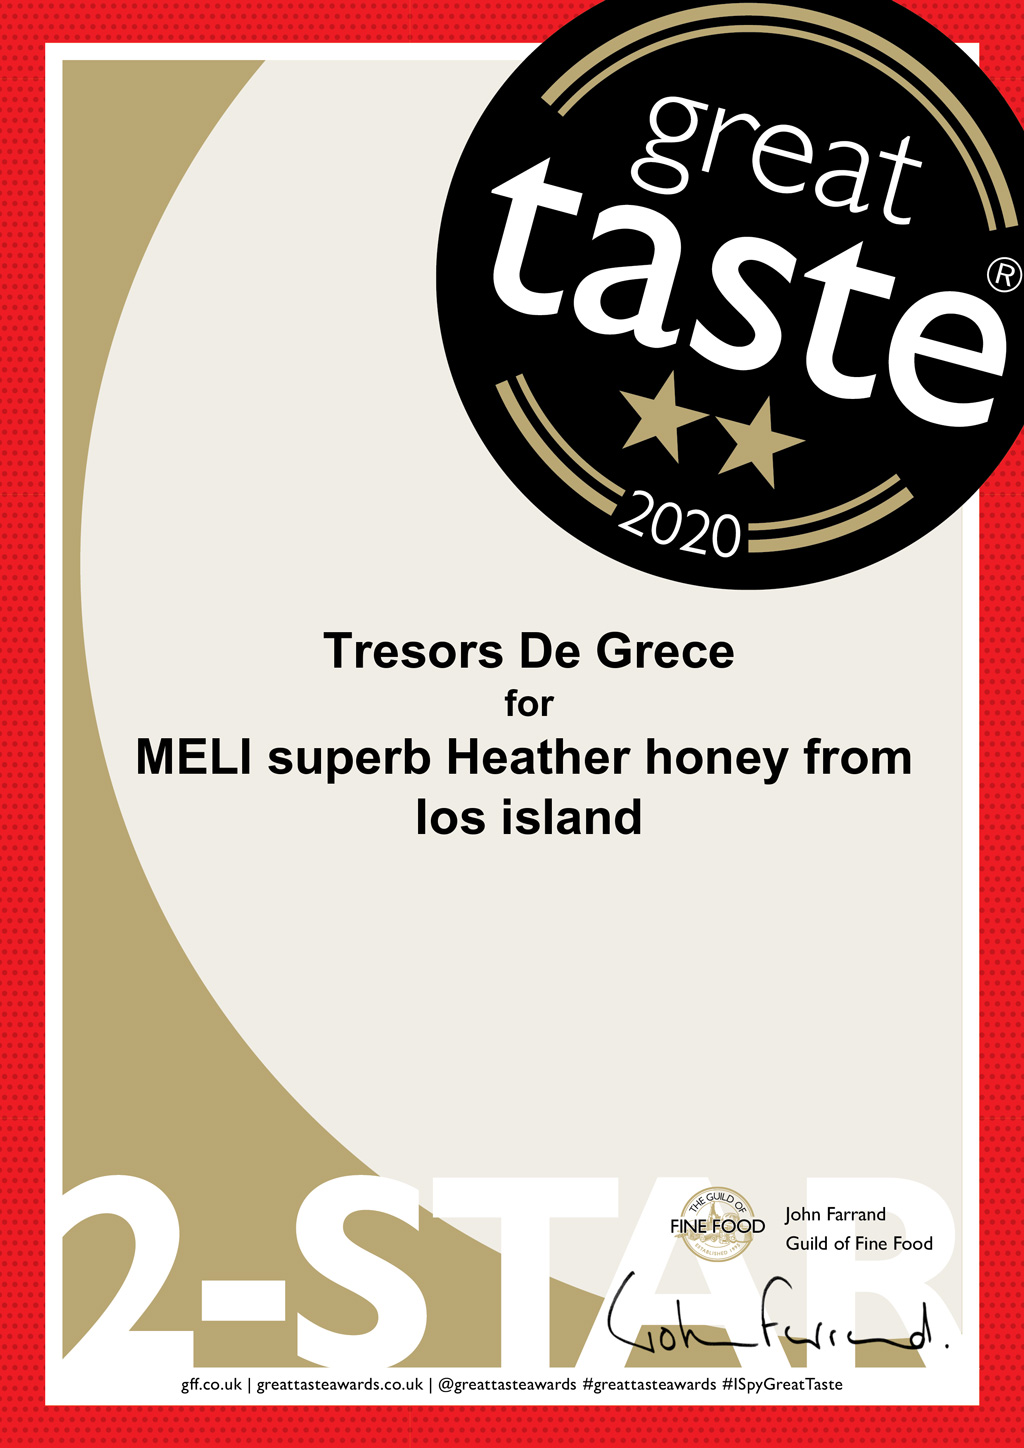 MELI superb Heather honey 2 stars Awards & Media